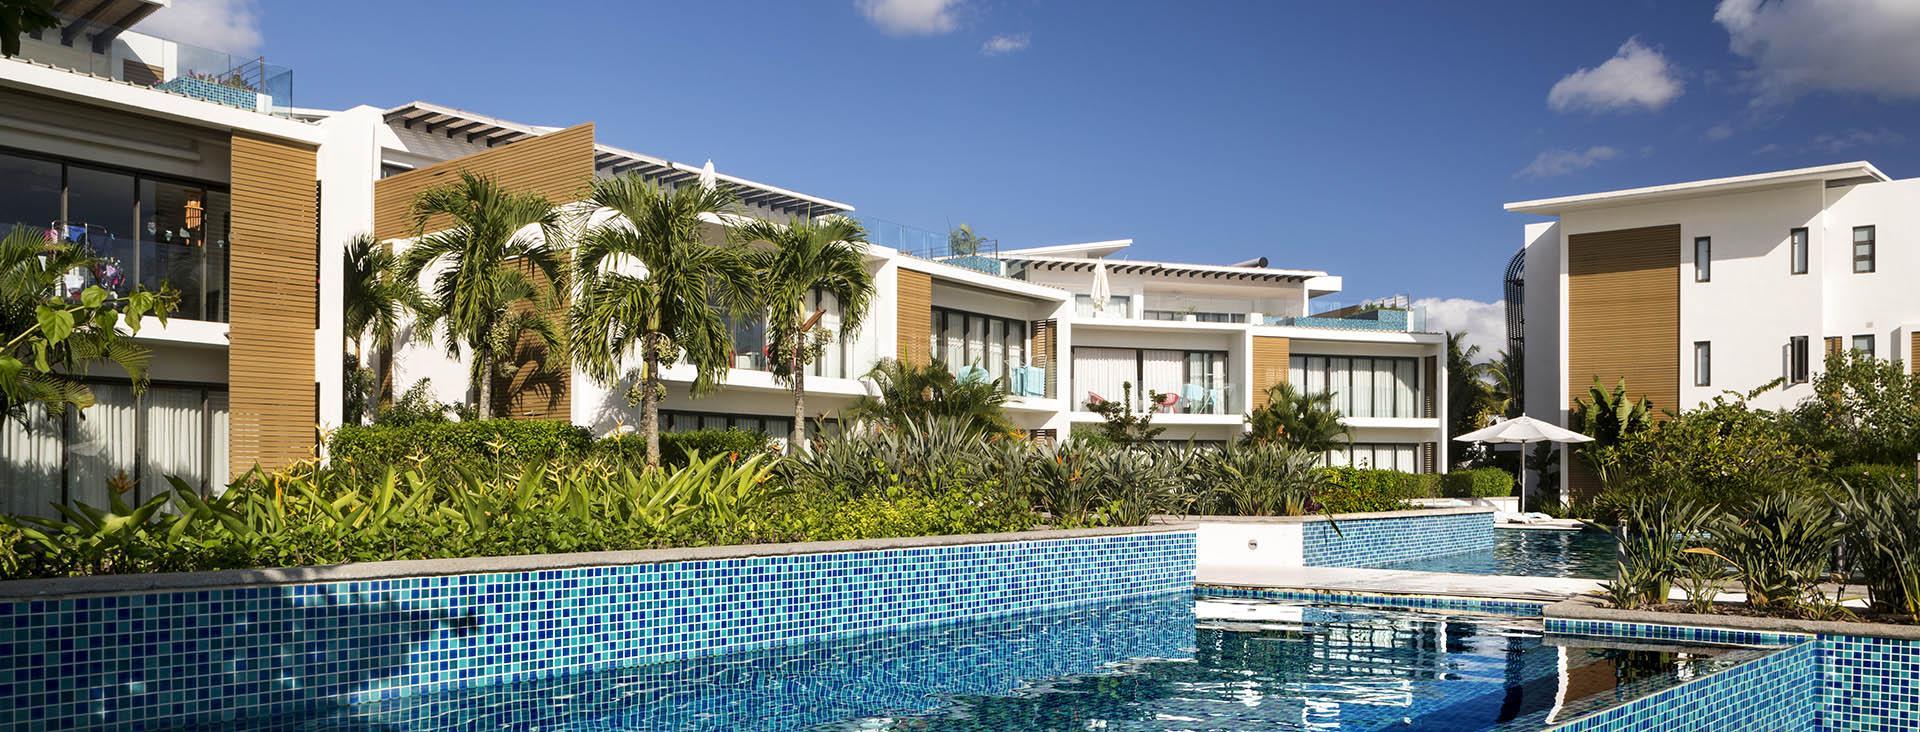 Villas in Mauritius on West coast at Tamarin